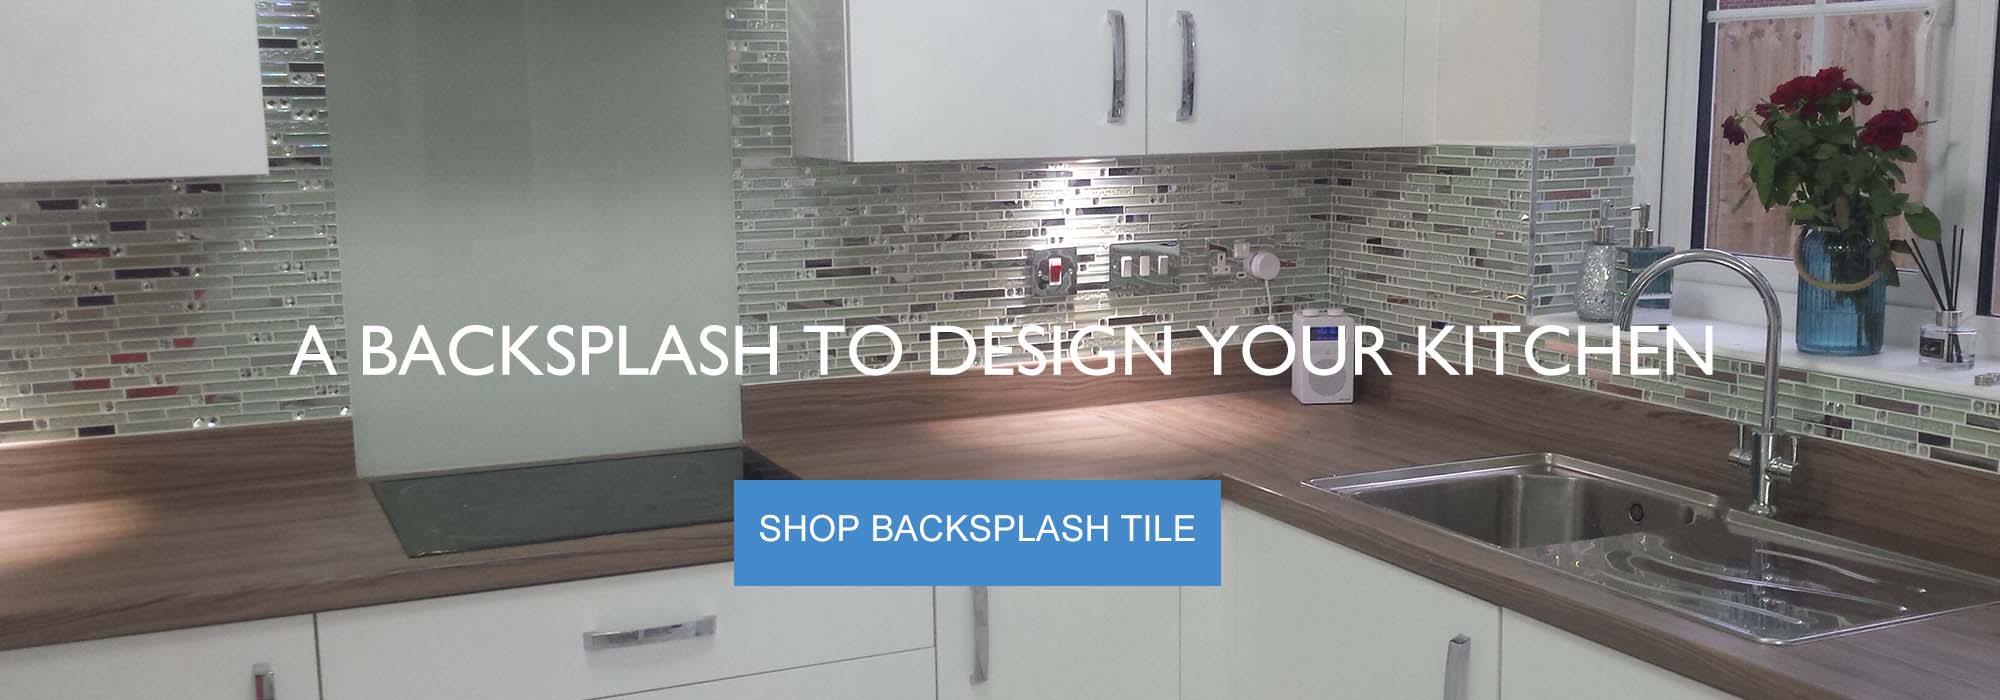 A backsplash to design your kitchen